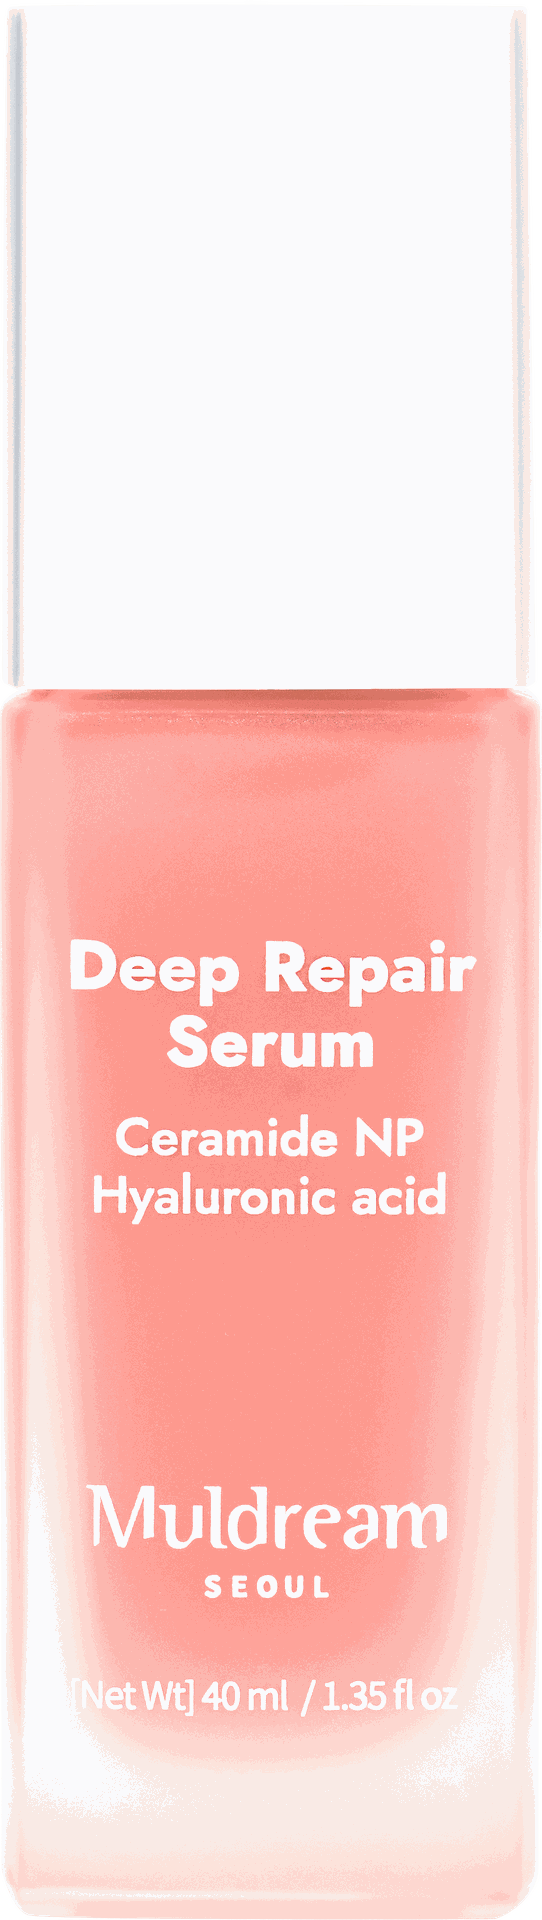 Deep Repair Serum- Ceramide NP, Hyaluronic acid